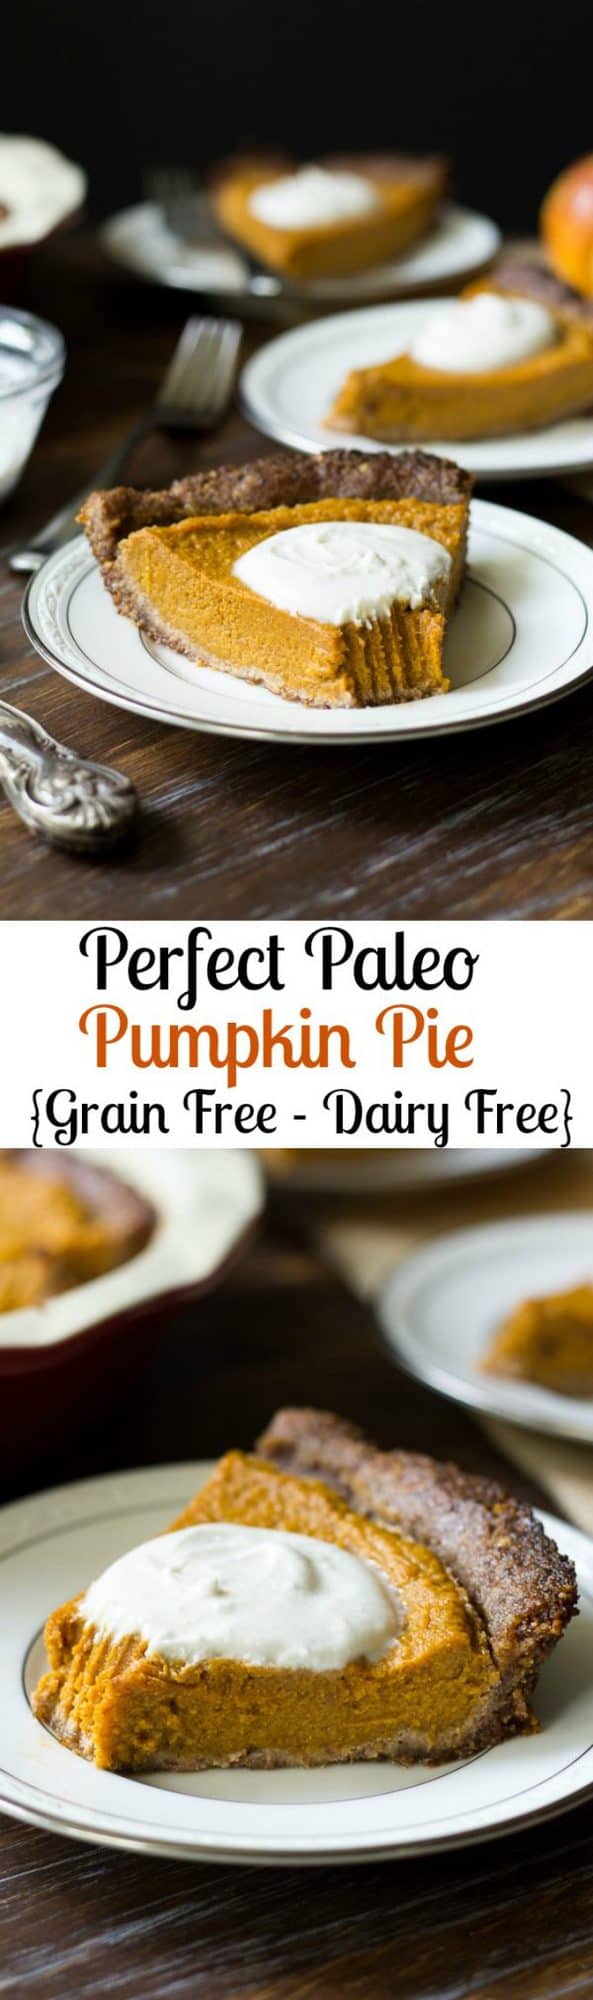 Paleo Pumpkin Pie Recipe with Pecan Coconut Crust